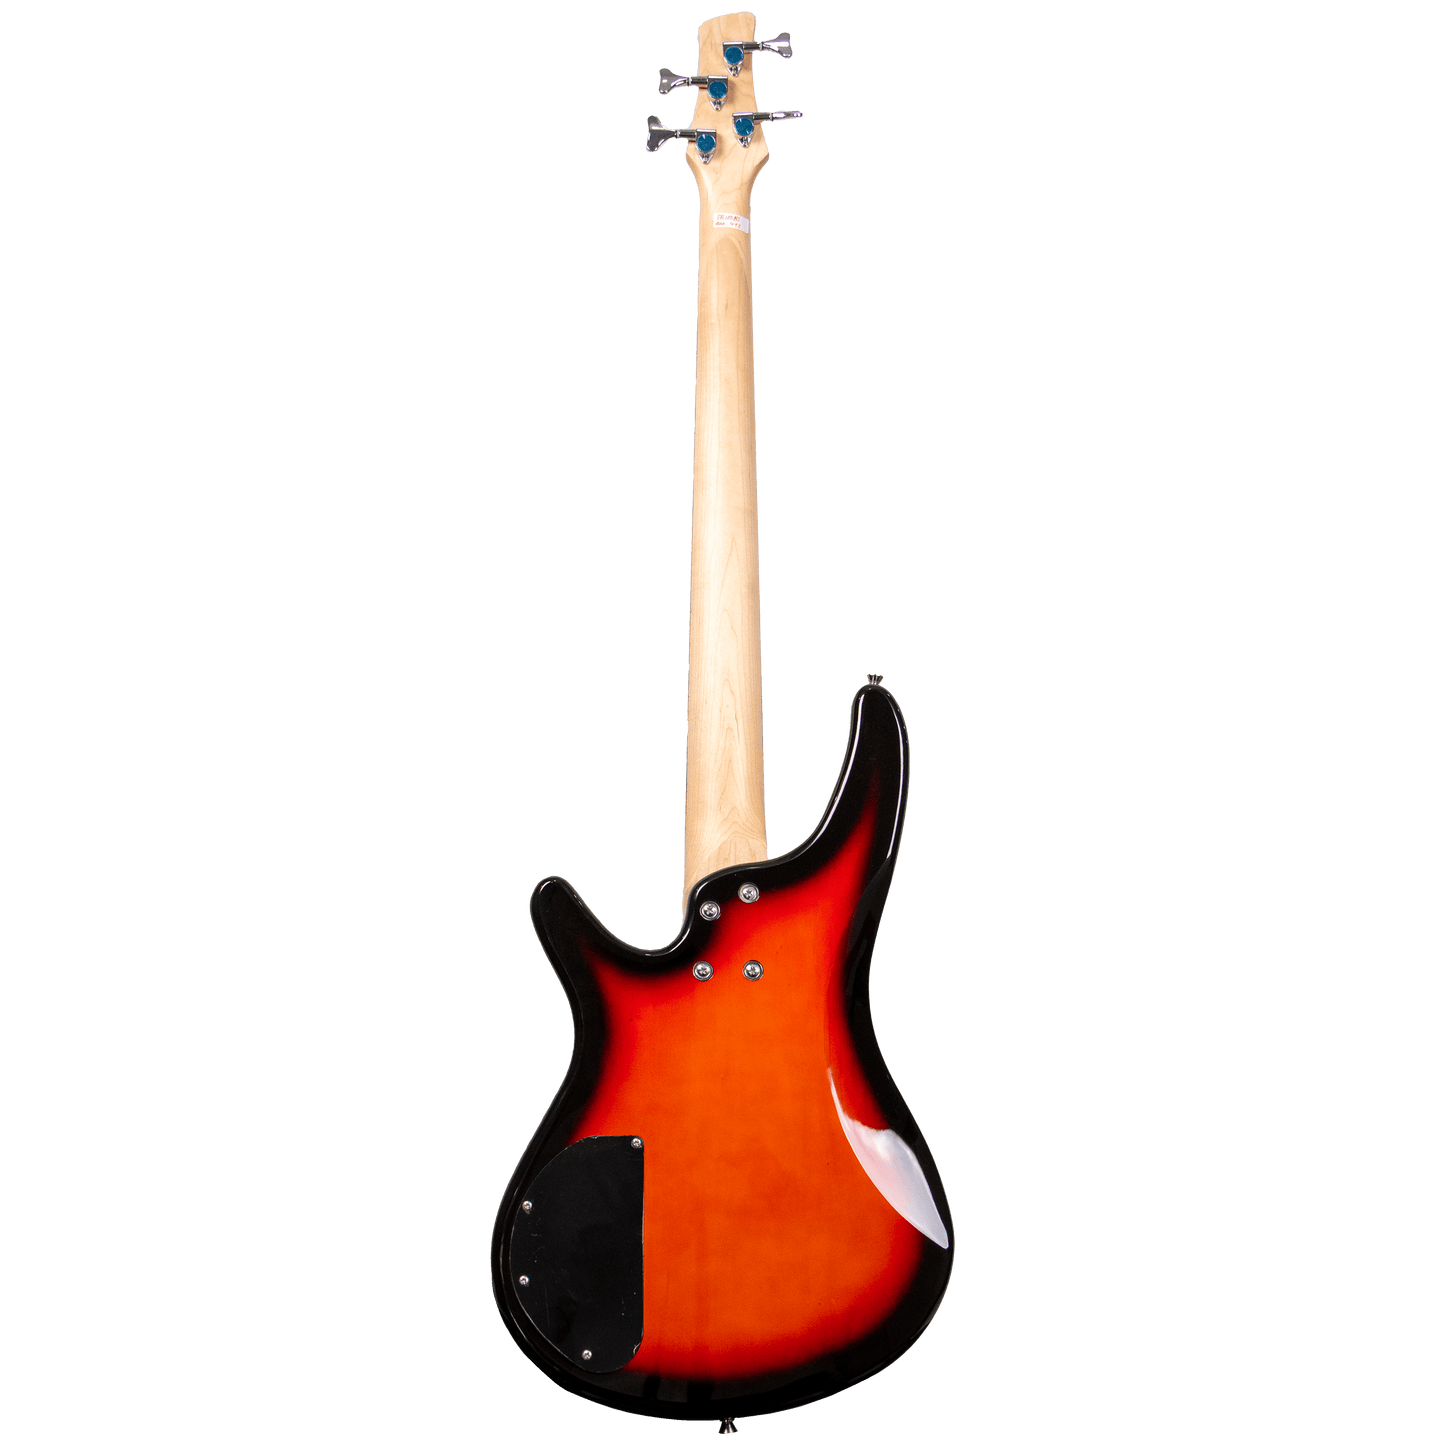 Tansen EB100 Guitar Bass Electric 4-String Laurel Fingerboard Split Coil Pickups